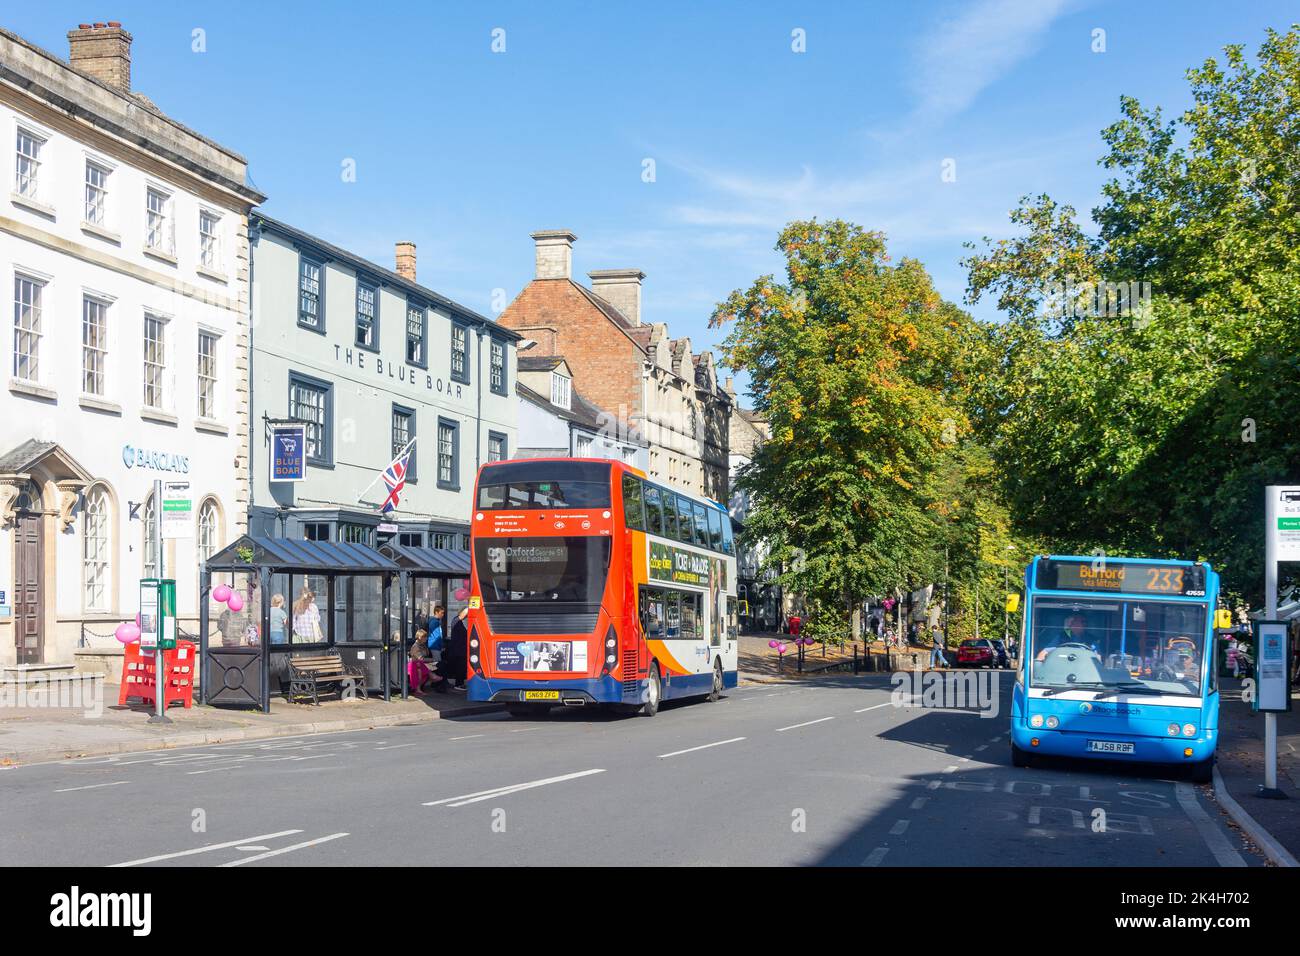 Local buses, Market Square, Witney, Oxfordshire, England, United Kingdom Stock Photo